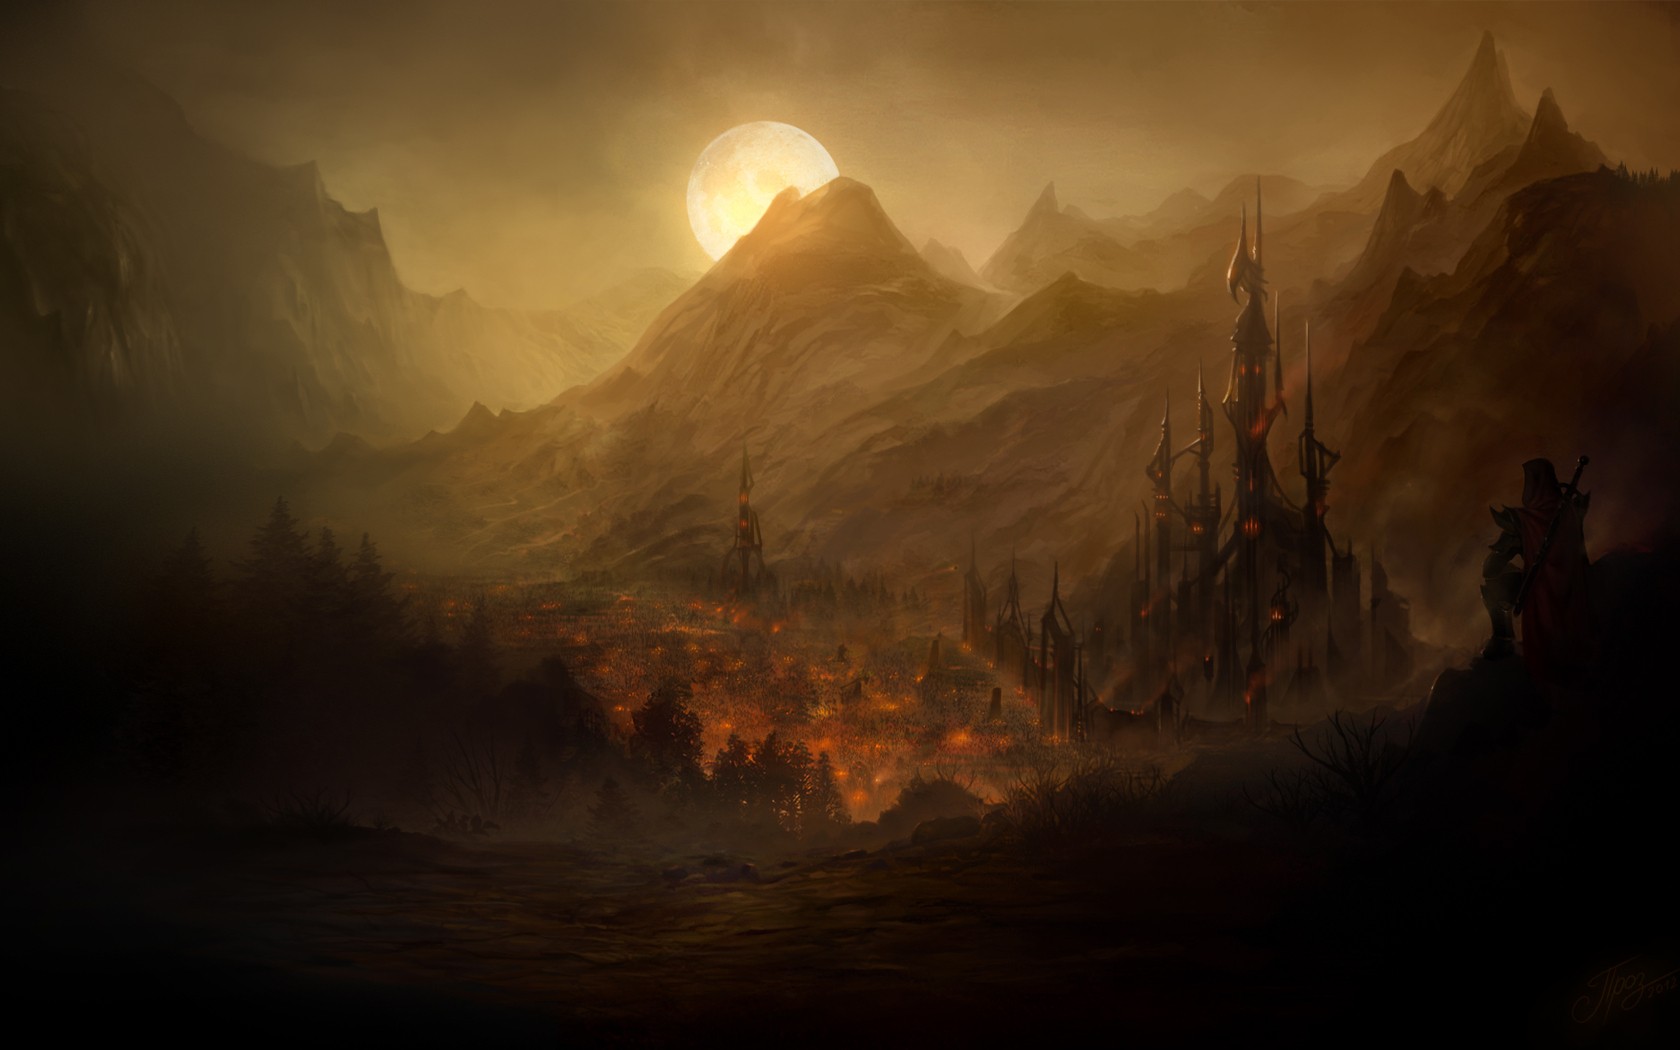 General 1680x1050 fantasy art artwork digital art mountains far view sunset burning warrior dark landscape